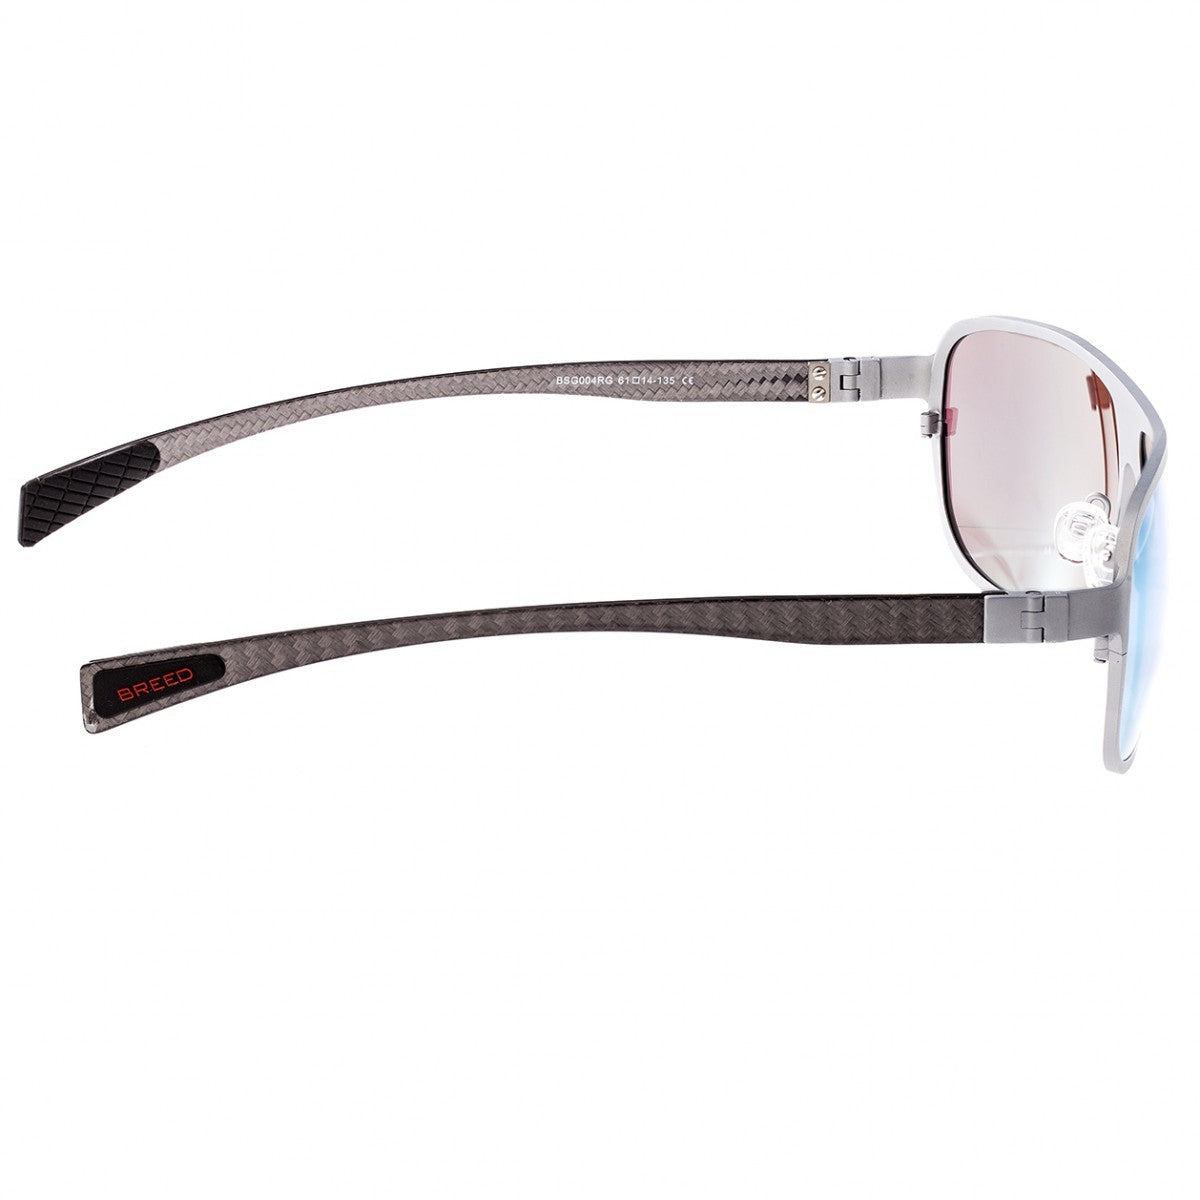 Breed Atmosphere Titanium And Carbon Fiber Polarized Sunglasses - Gunmetal/Green - BSG004SRG